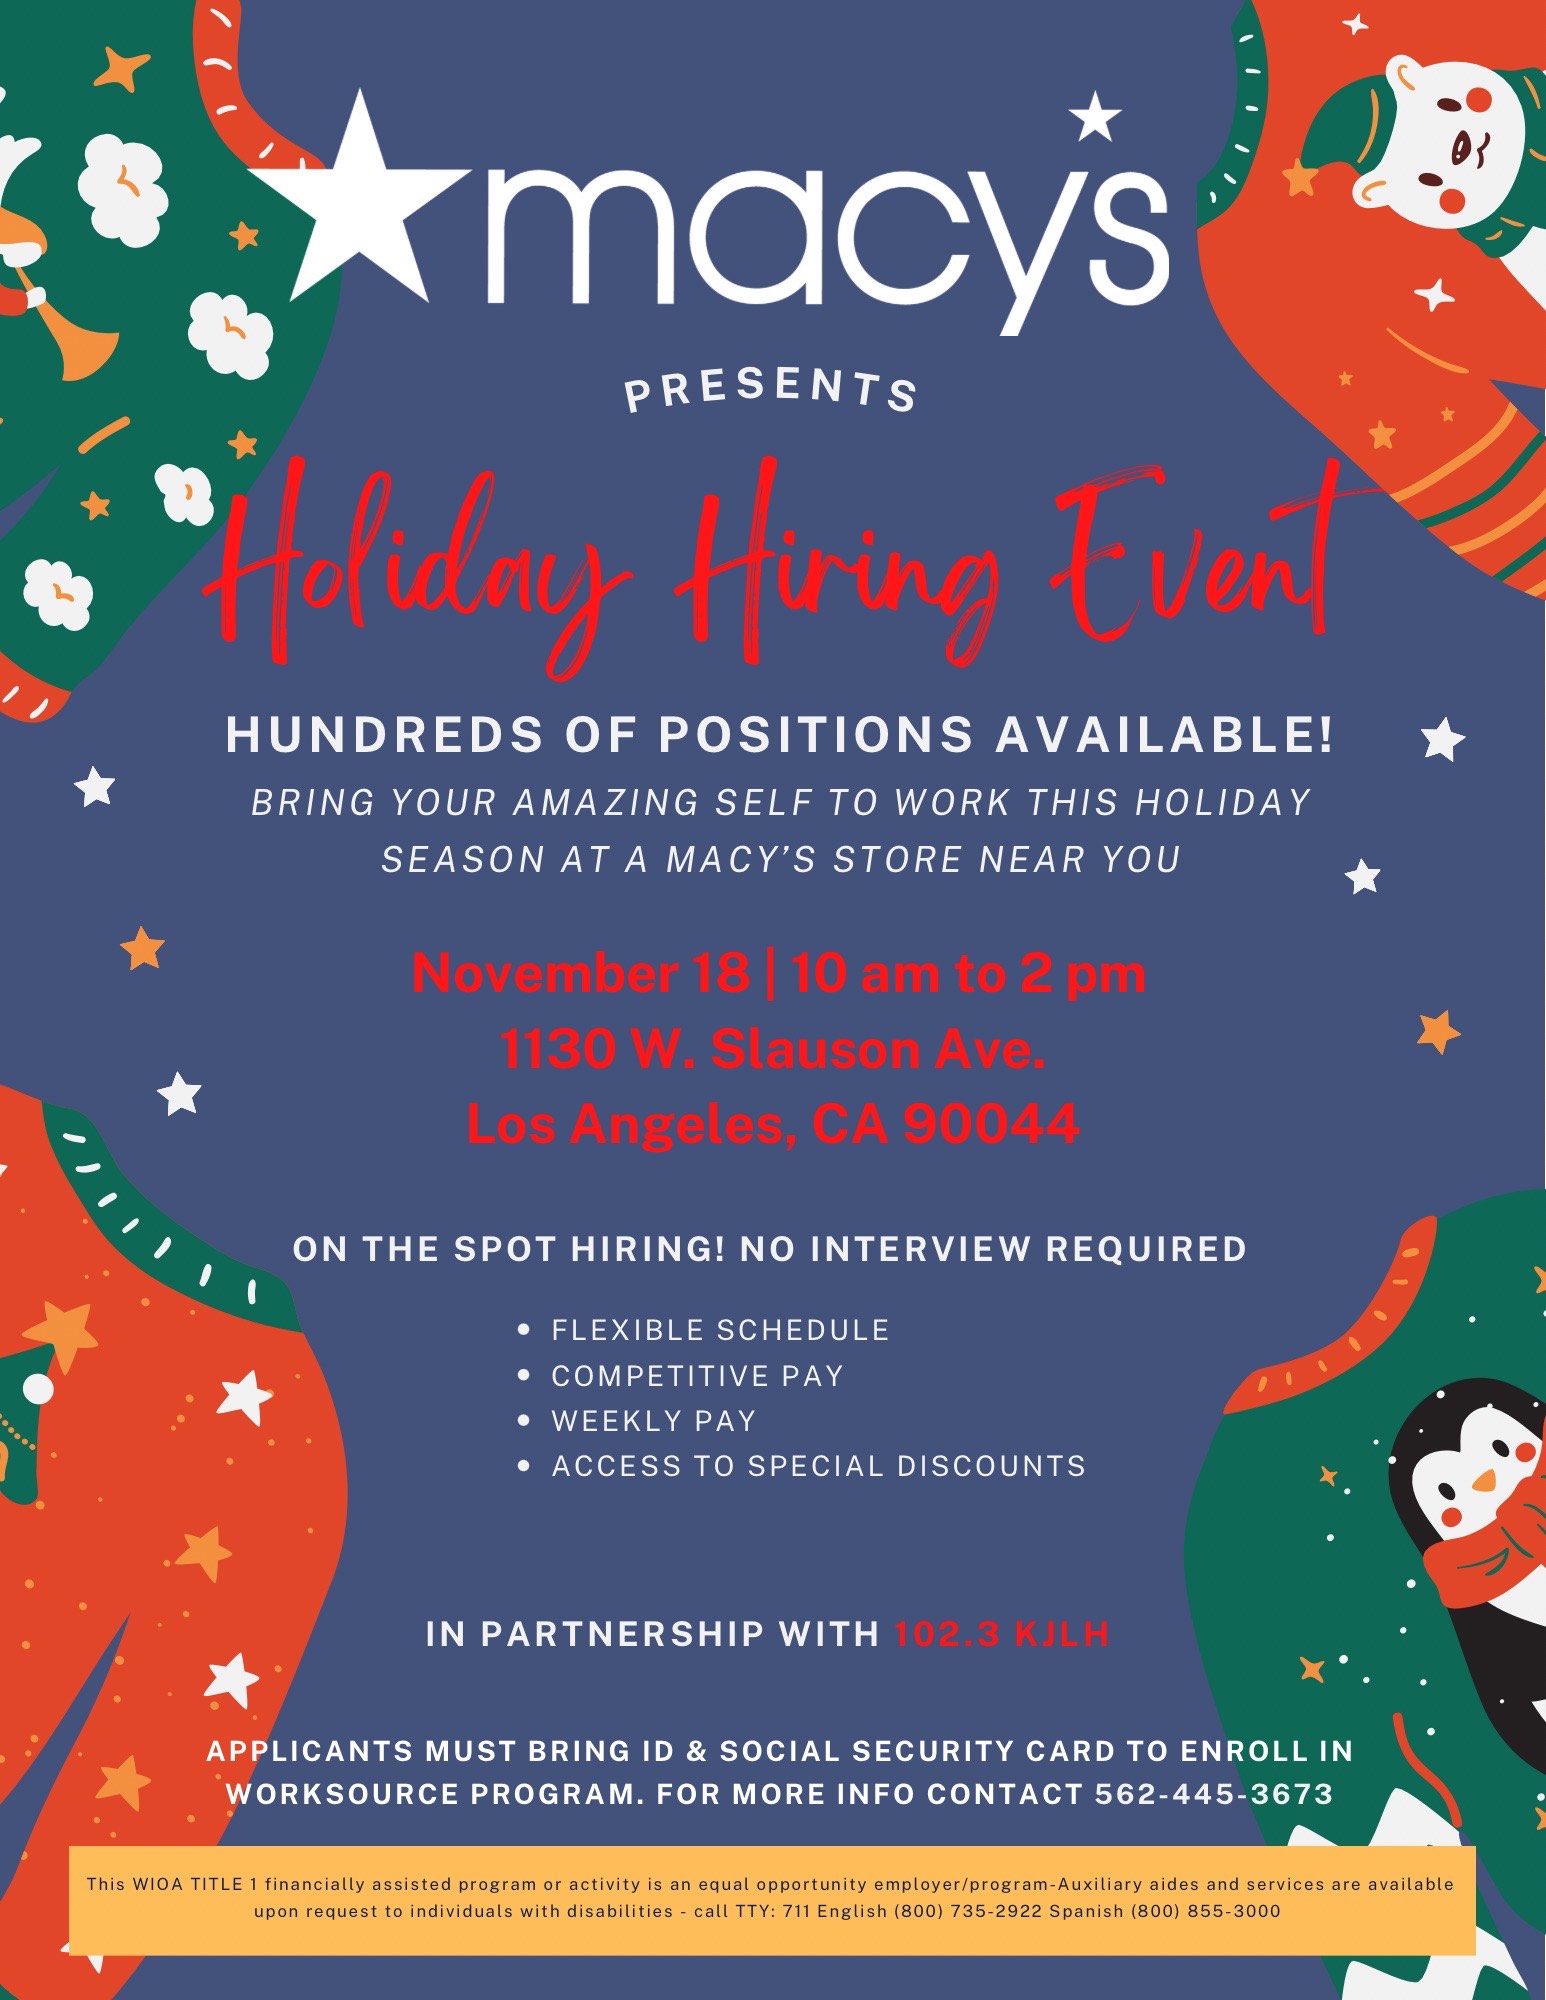 Macys holiday hiring event!